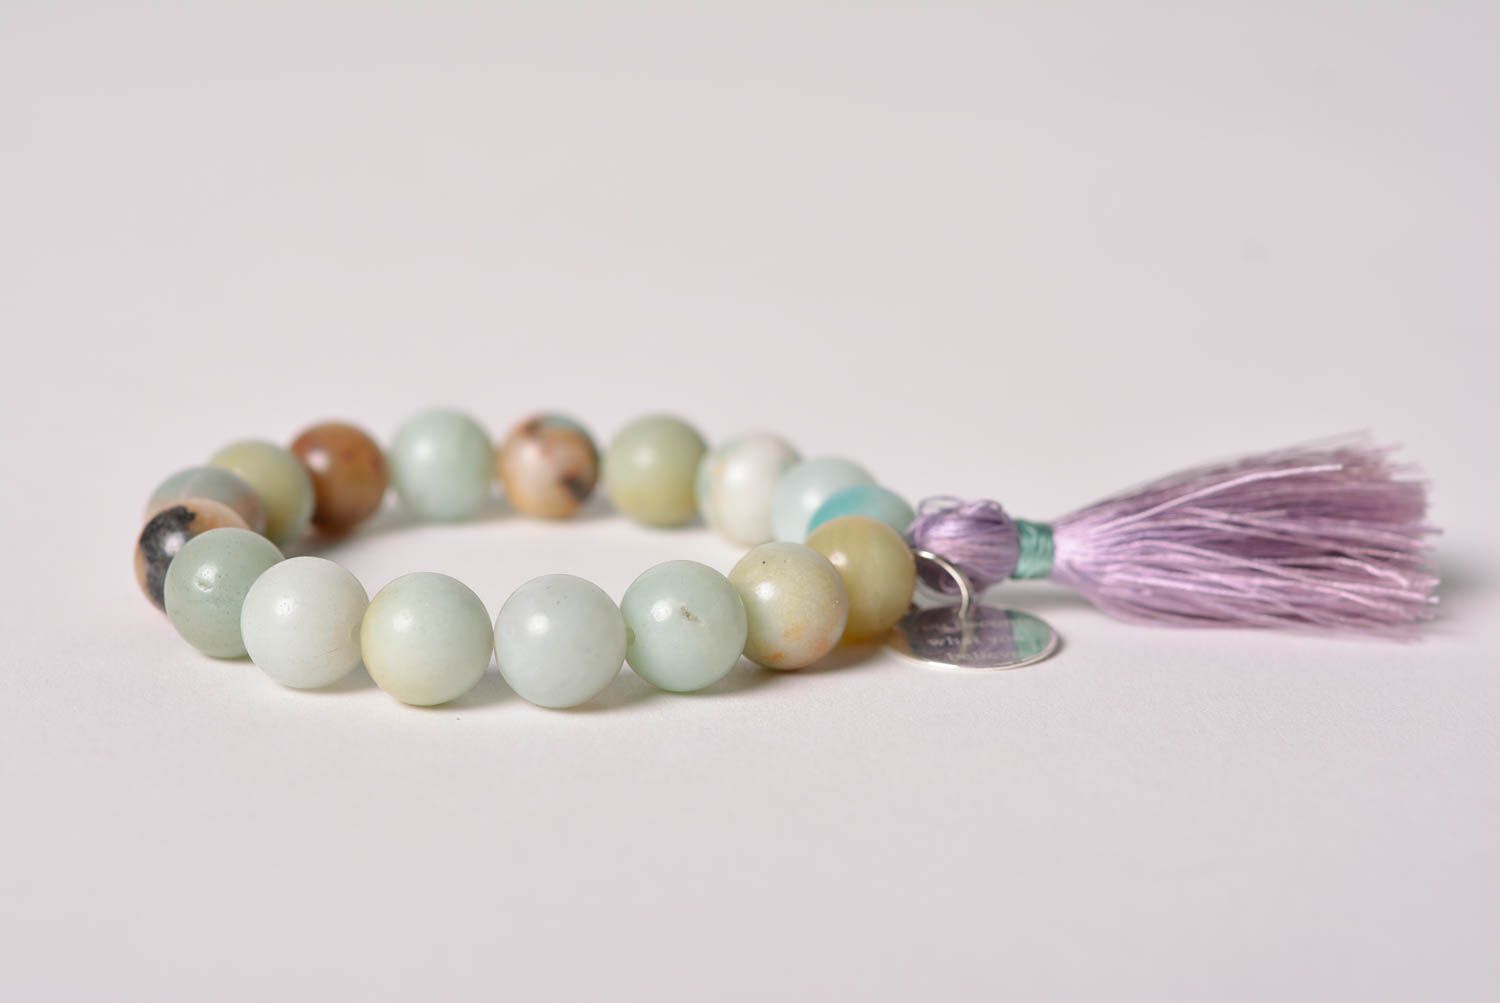 Handmade wrist bracelet with natural amazonite stone beads and thread tassels photo 4